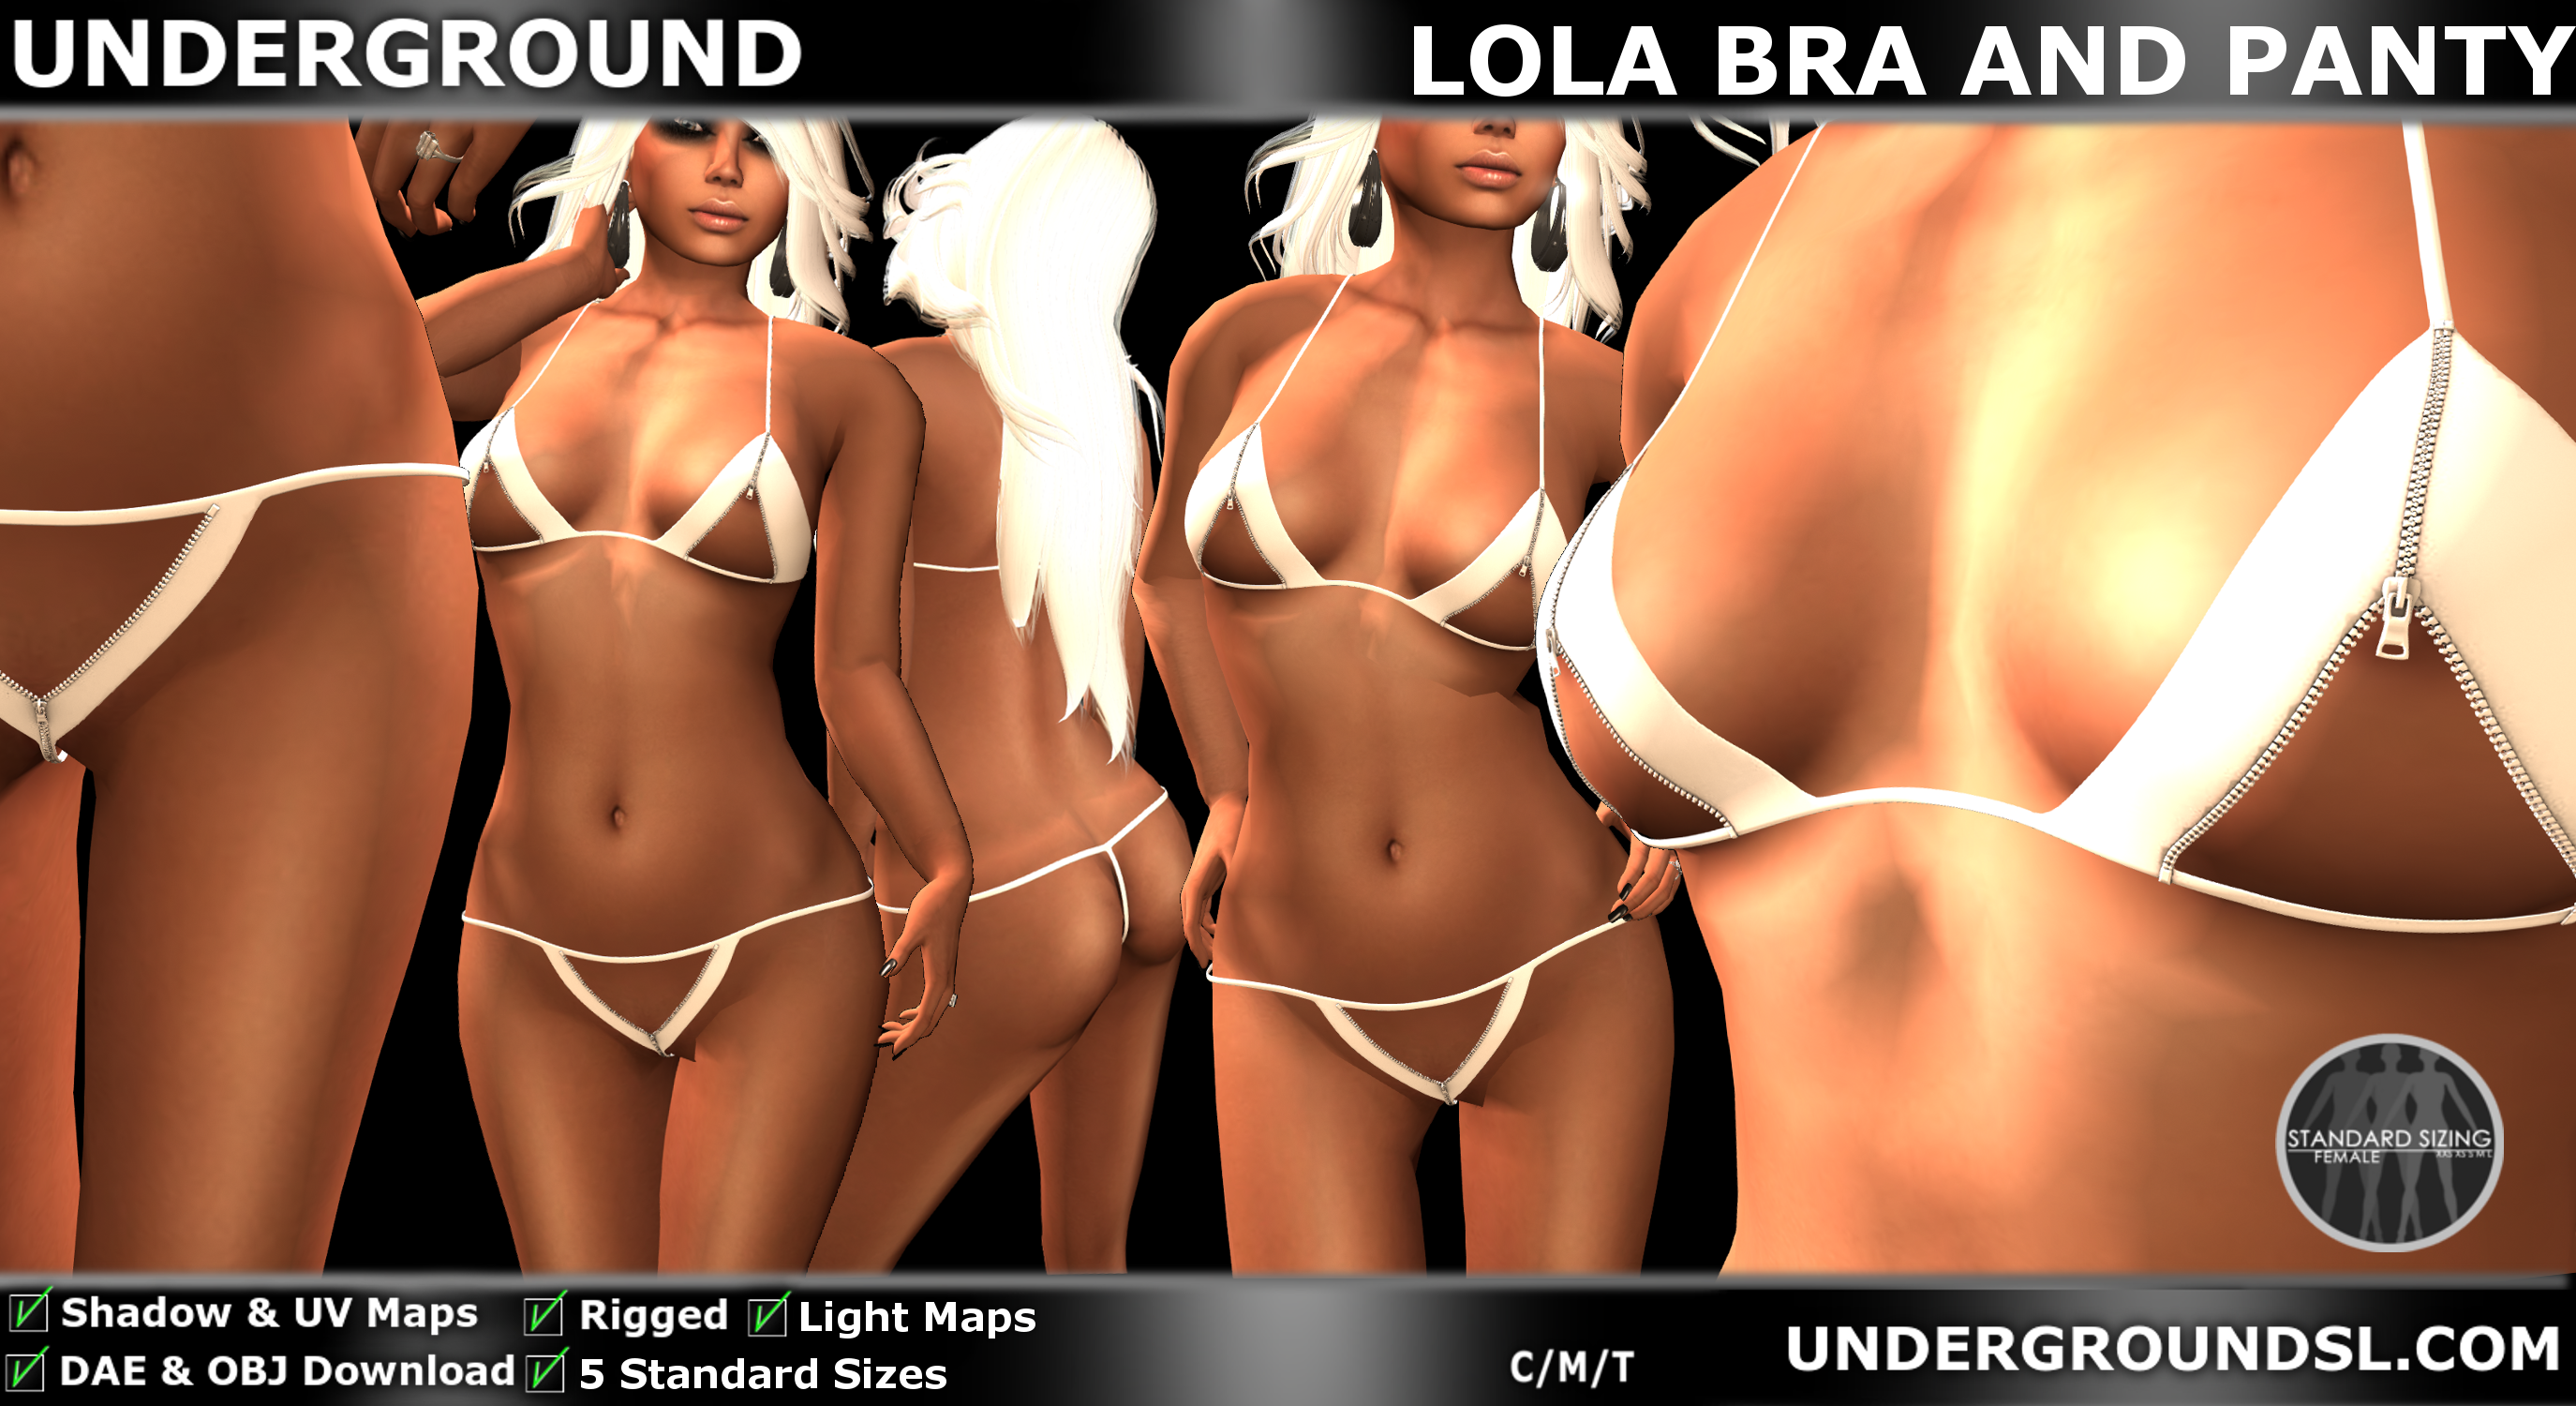 Lola bra and panty kit. 